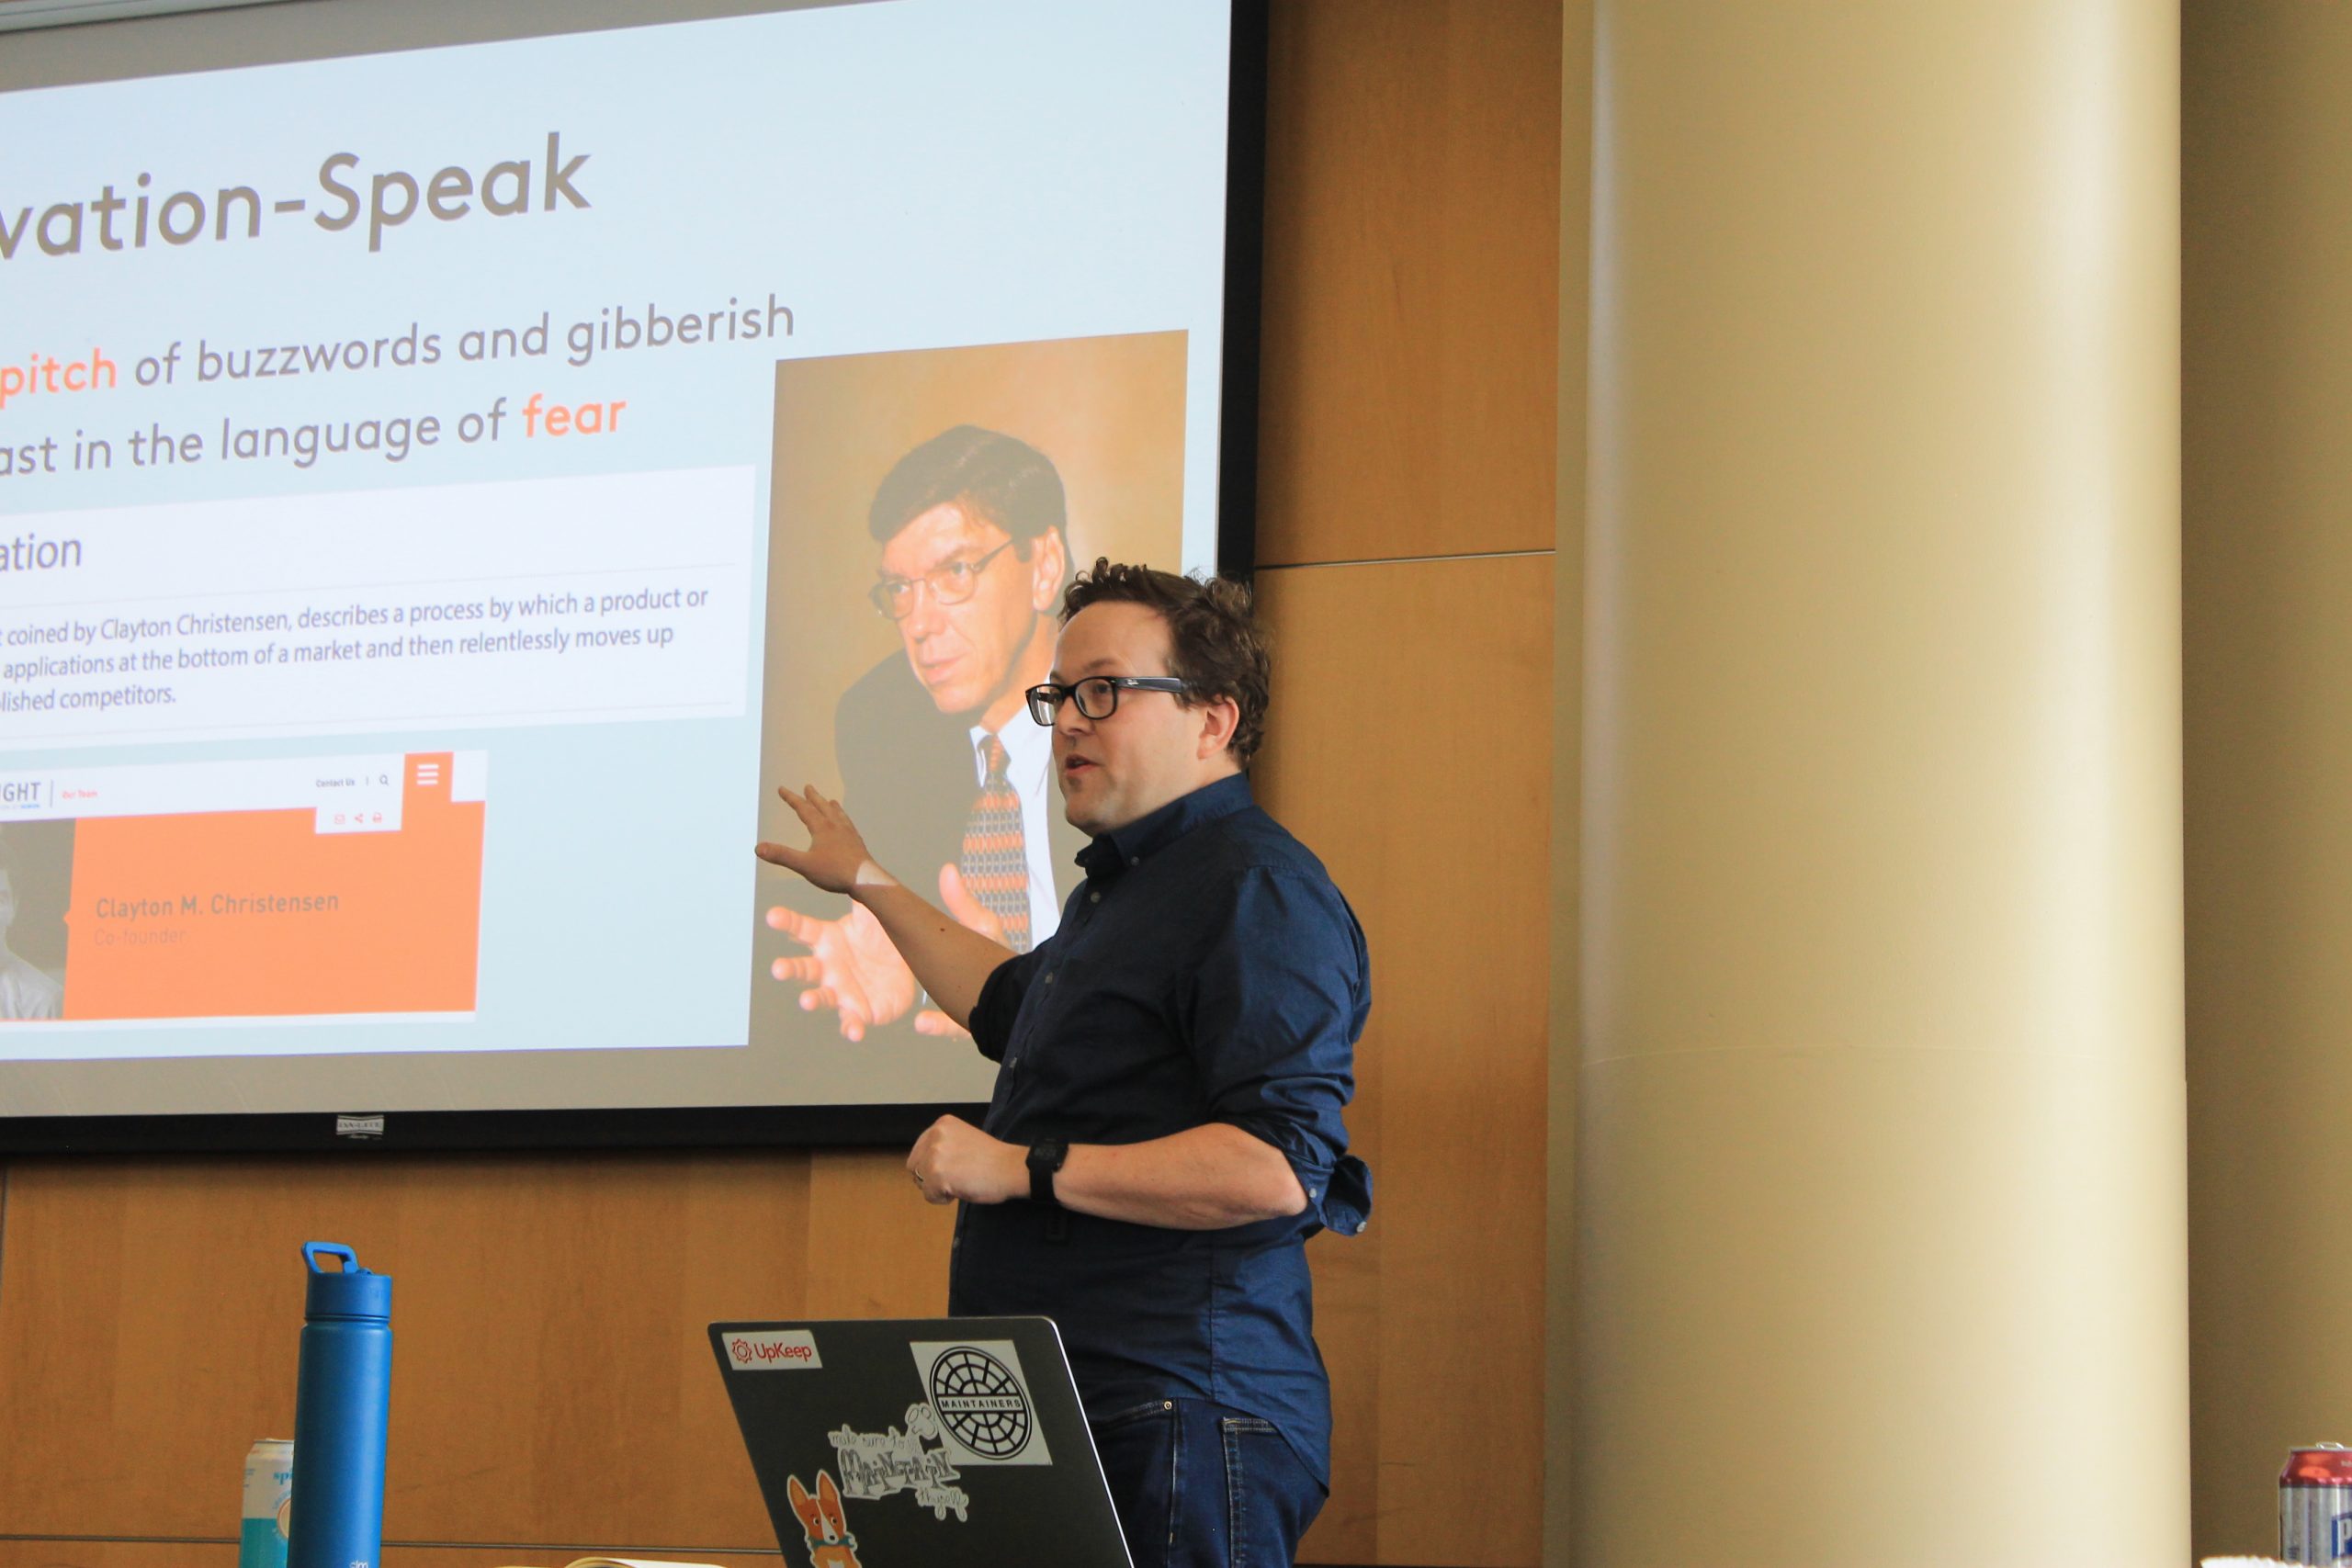 Lee Vinsel presenting slide on innovation-speak